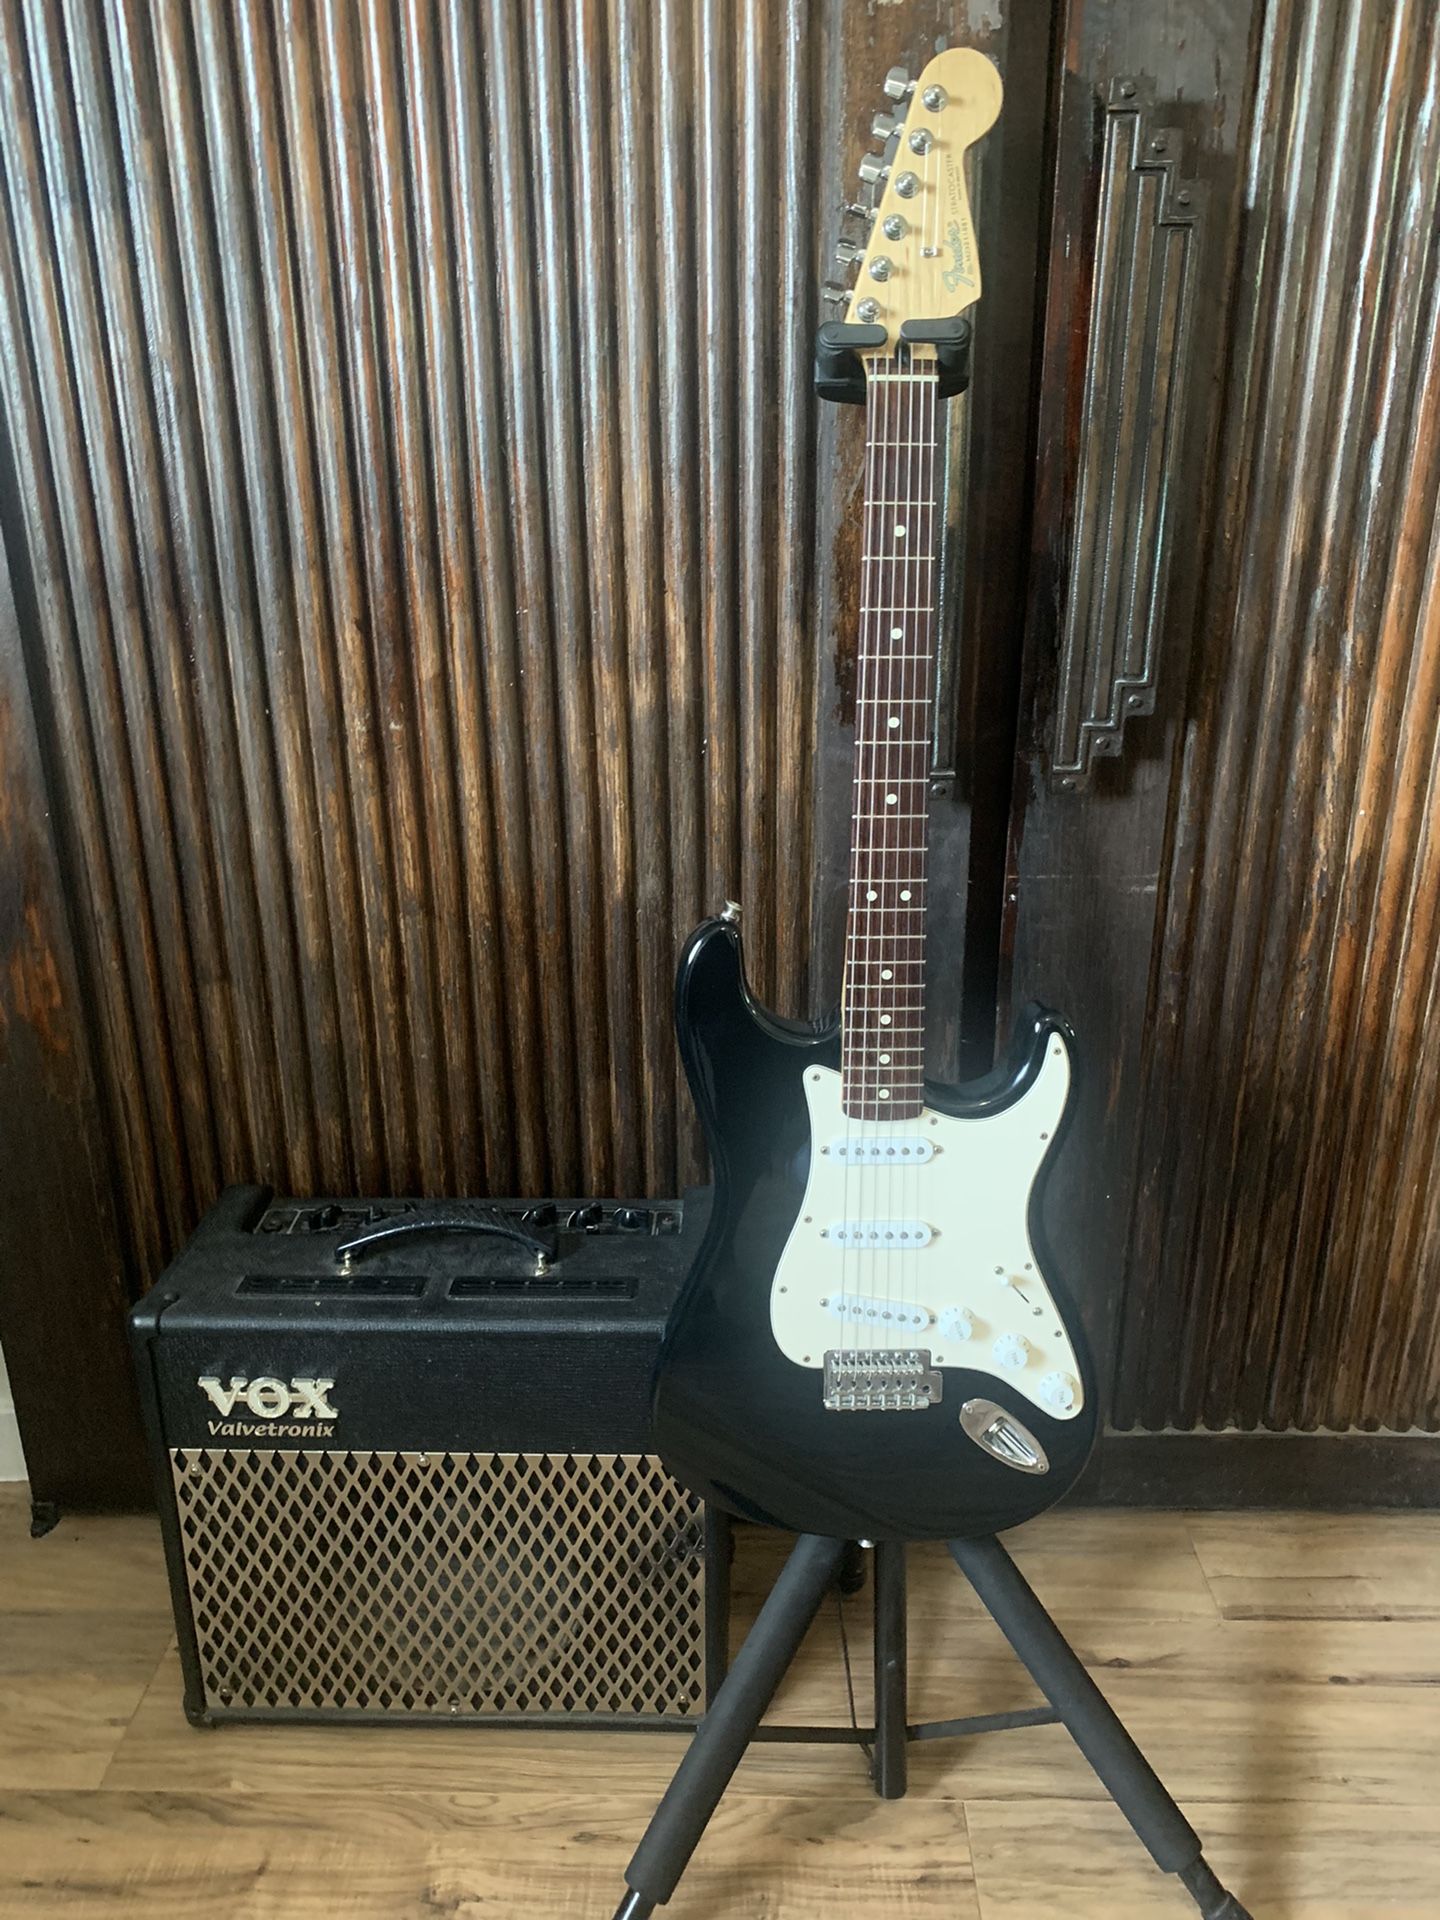 Fender Stratocaster Guitar With Vox Amp